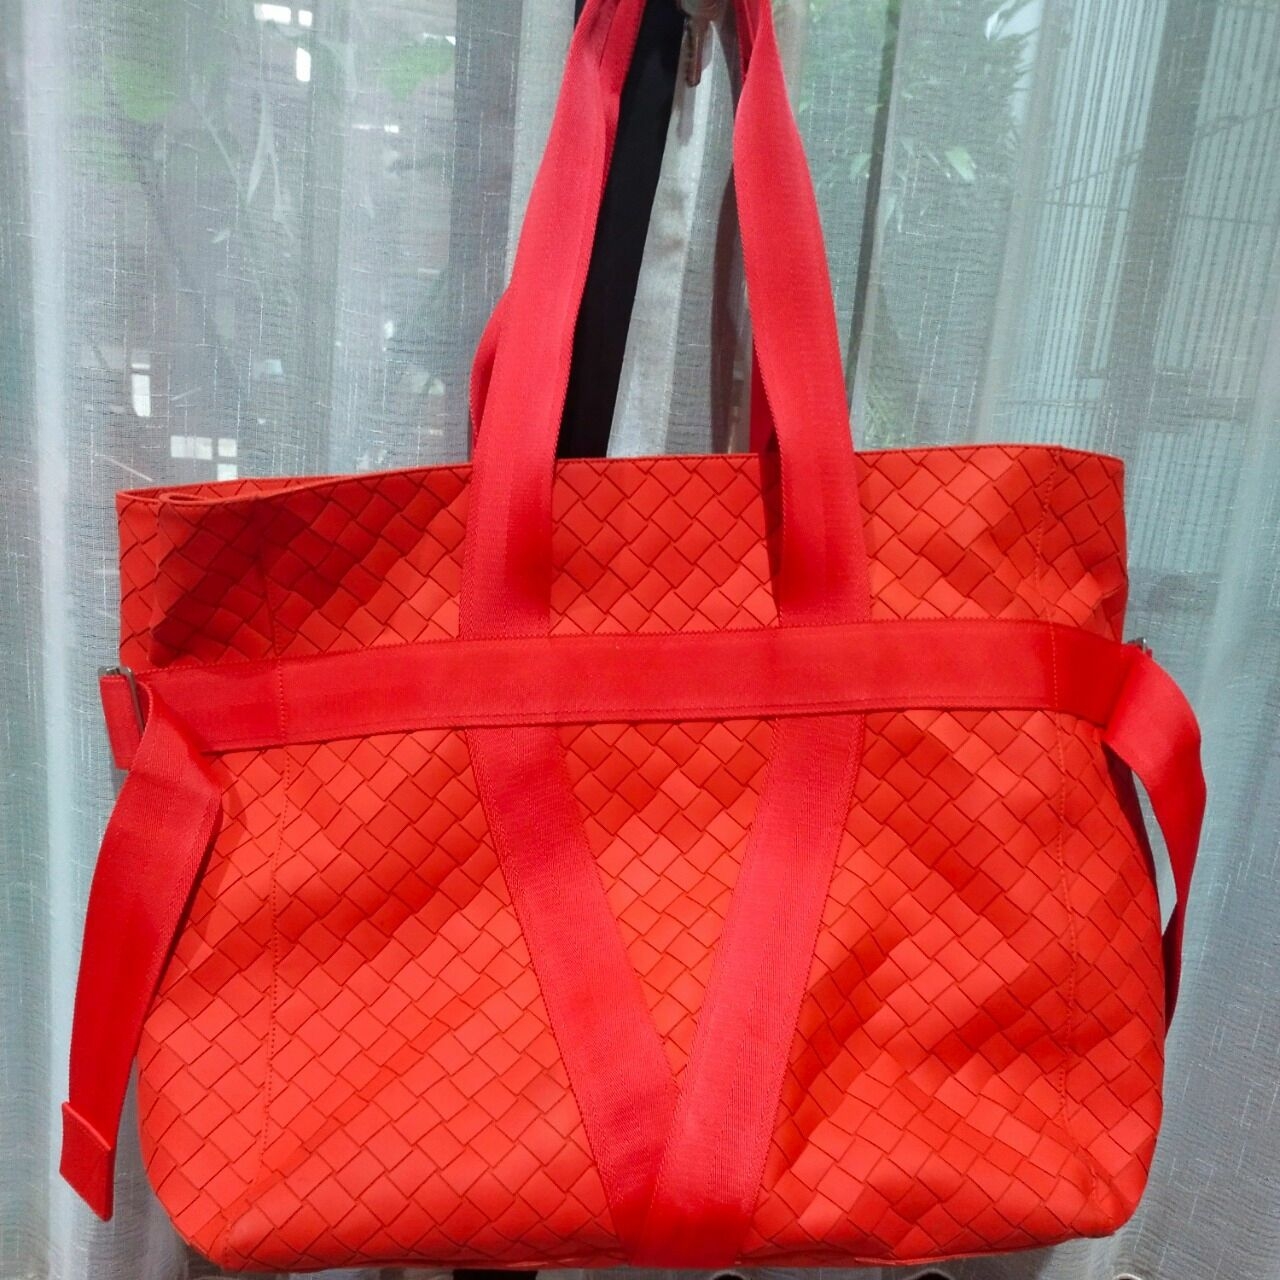 Bottega Veneta Red Plaid Tote Bag